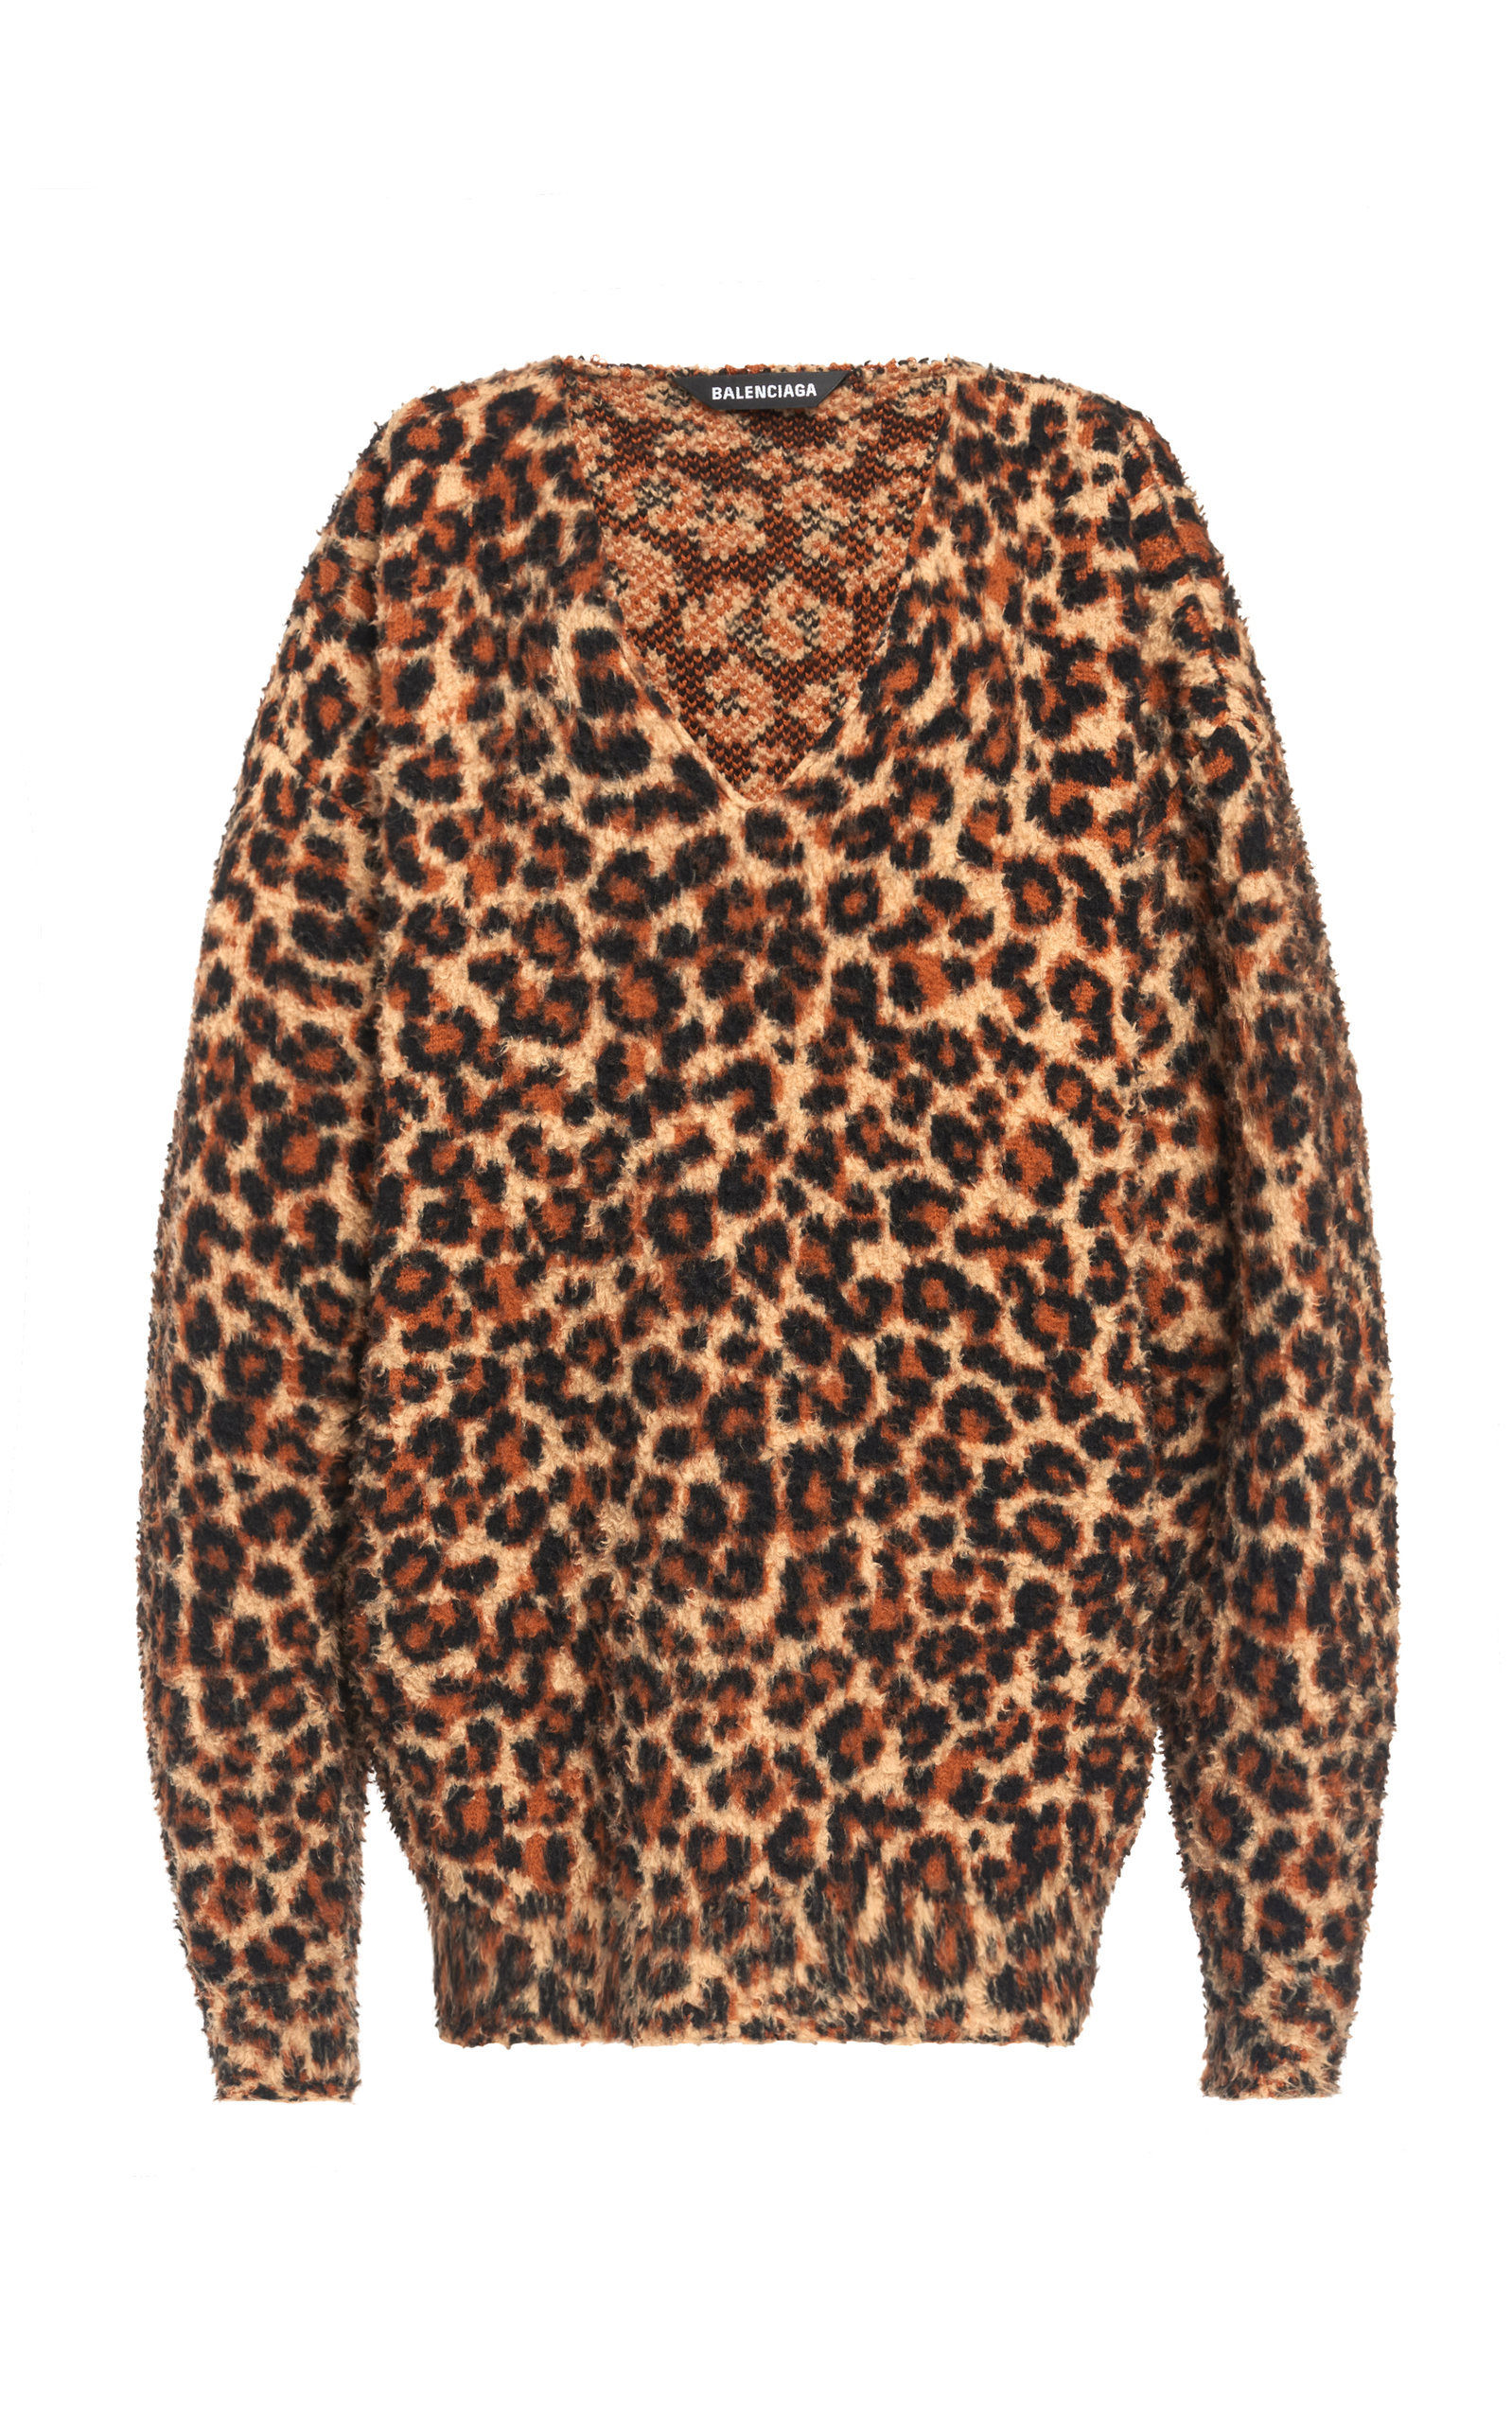 Balenciaga Women's Oversized Leopard-Knit Wool-Blend Sweater